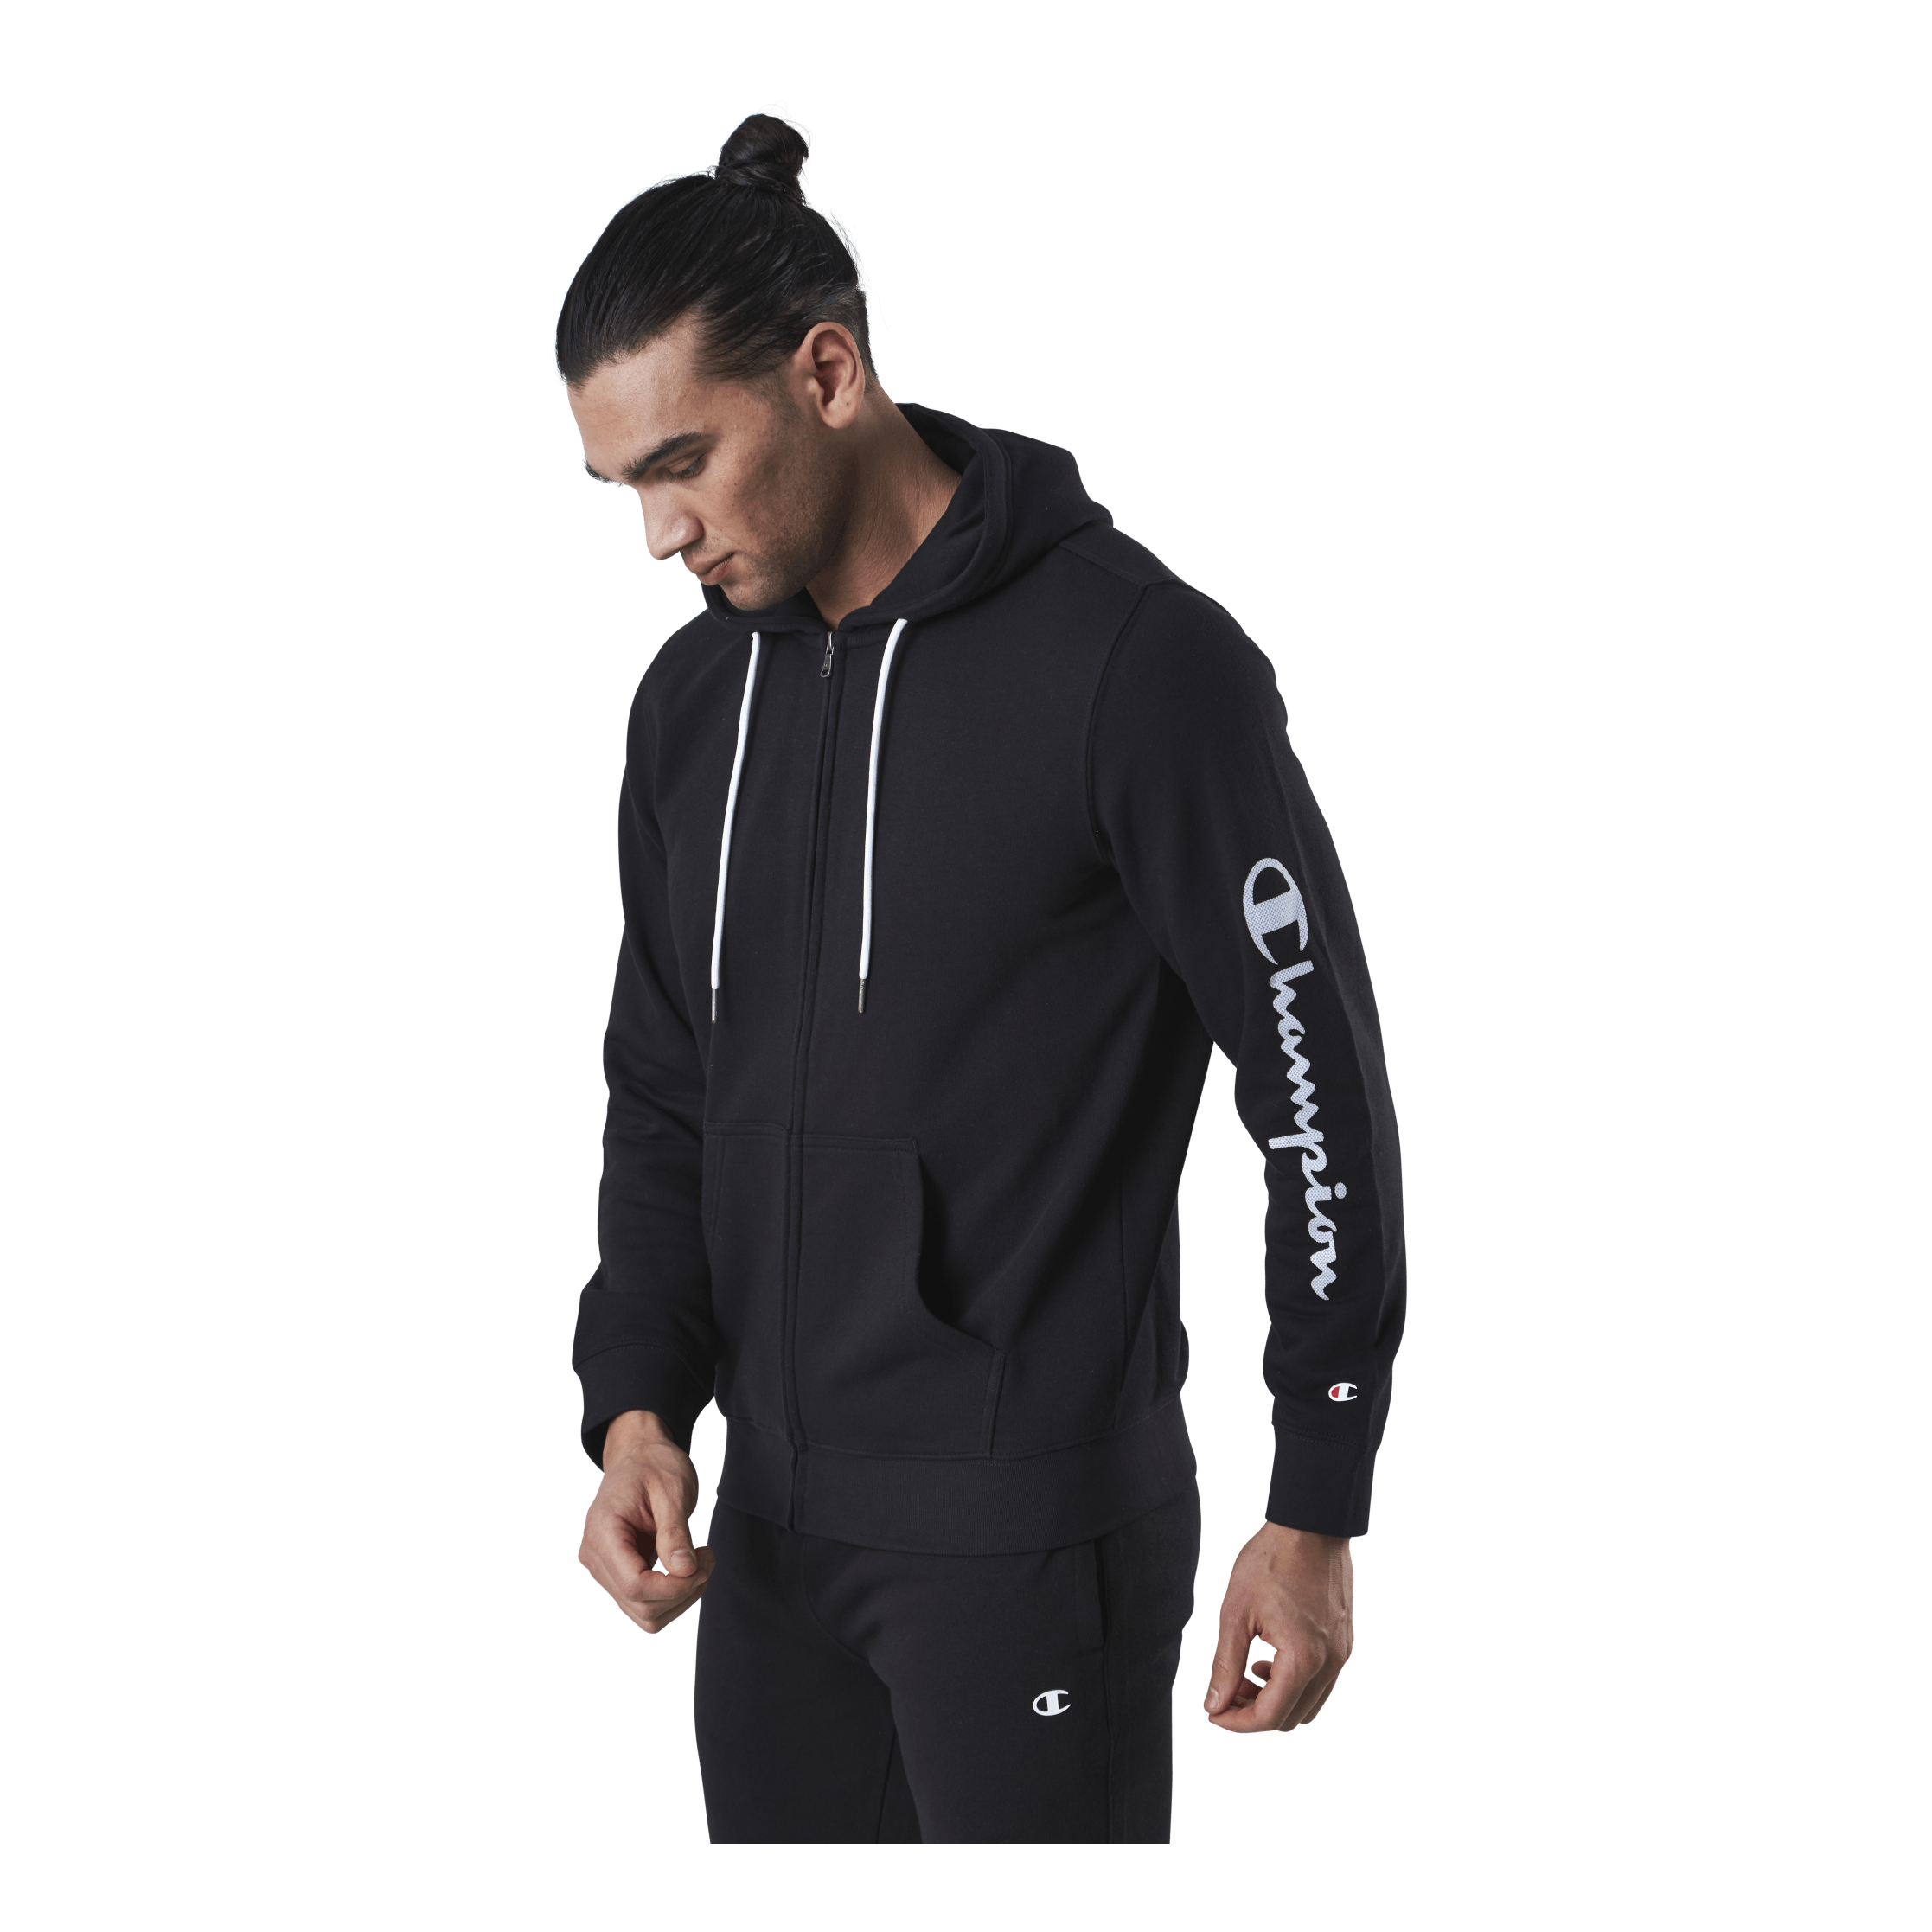 Meddele Merchandiser Tom Audreath Champion Hooded Full Zip Sweatshirt Black | Runforest.com